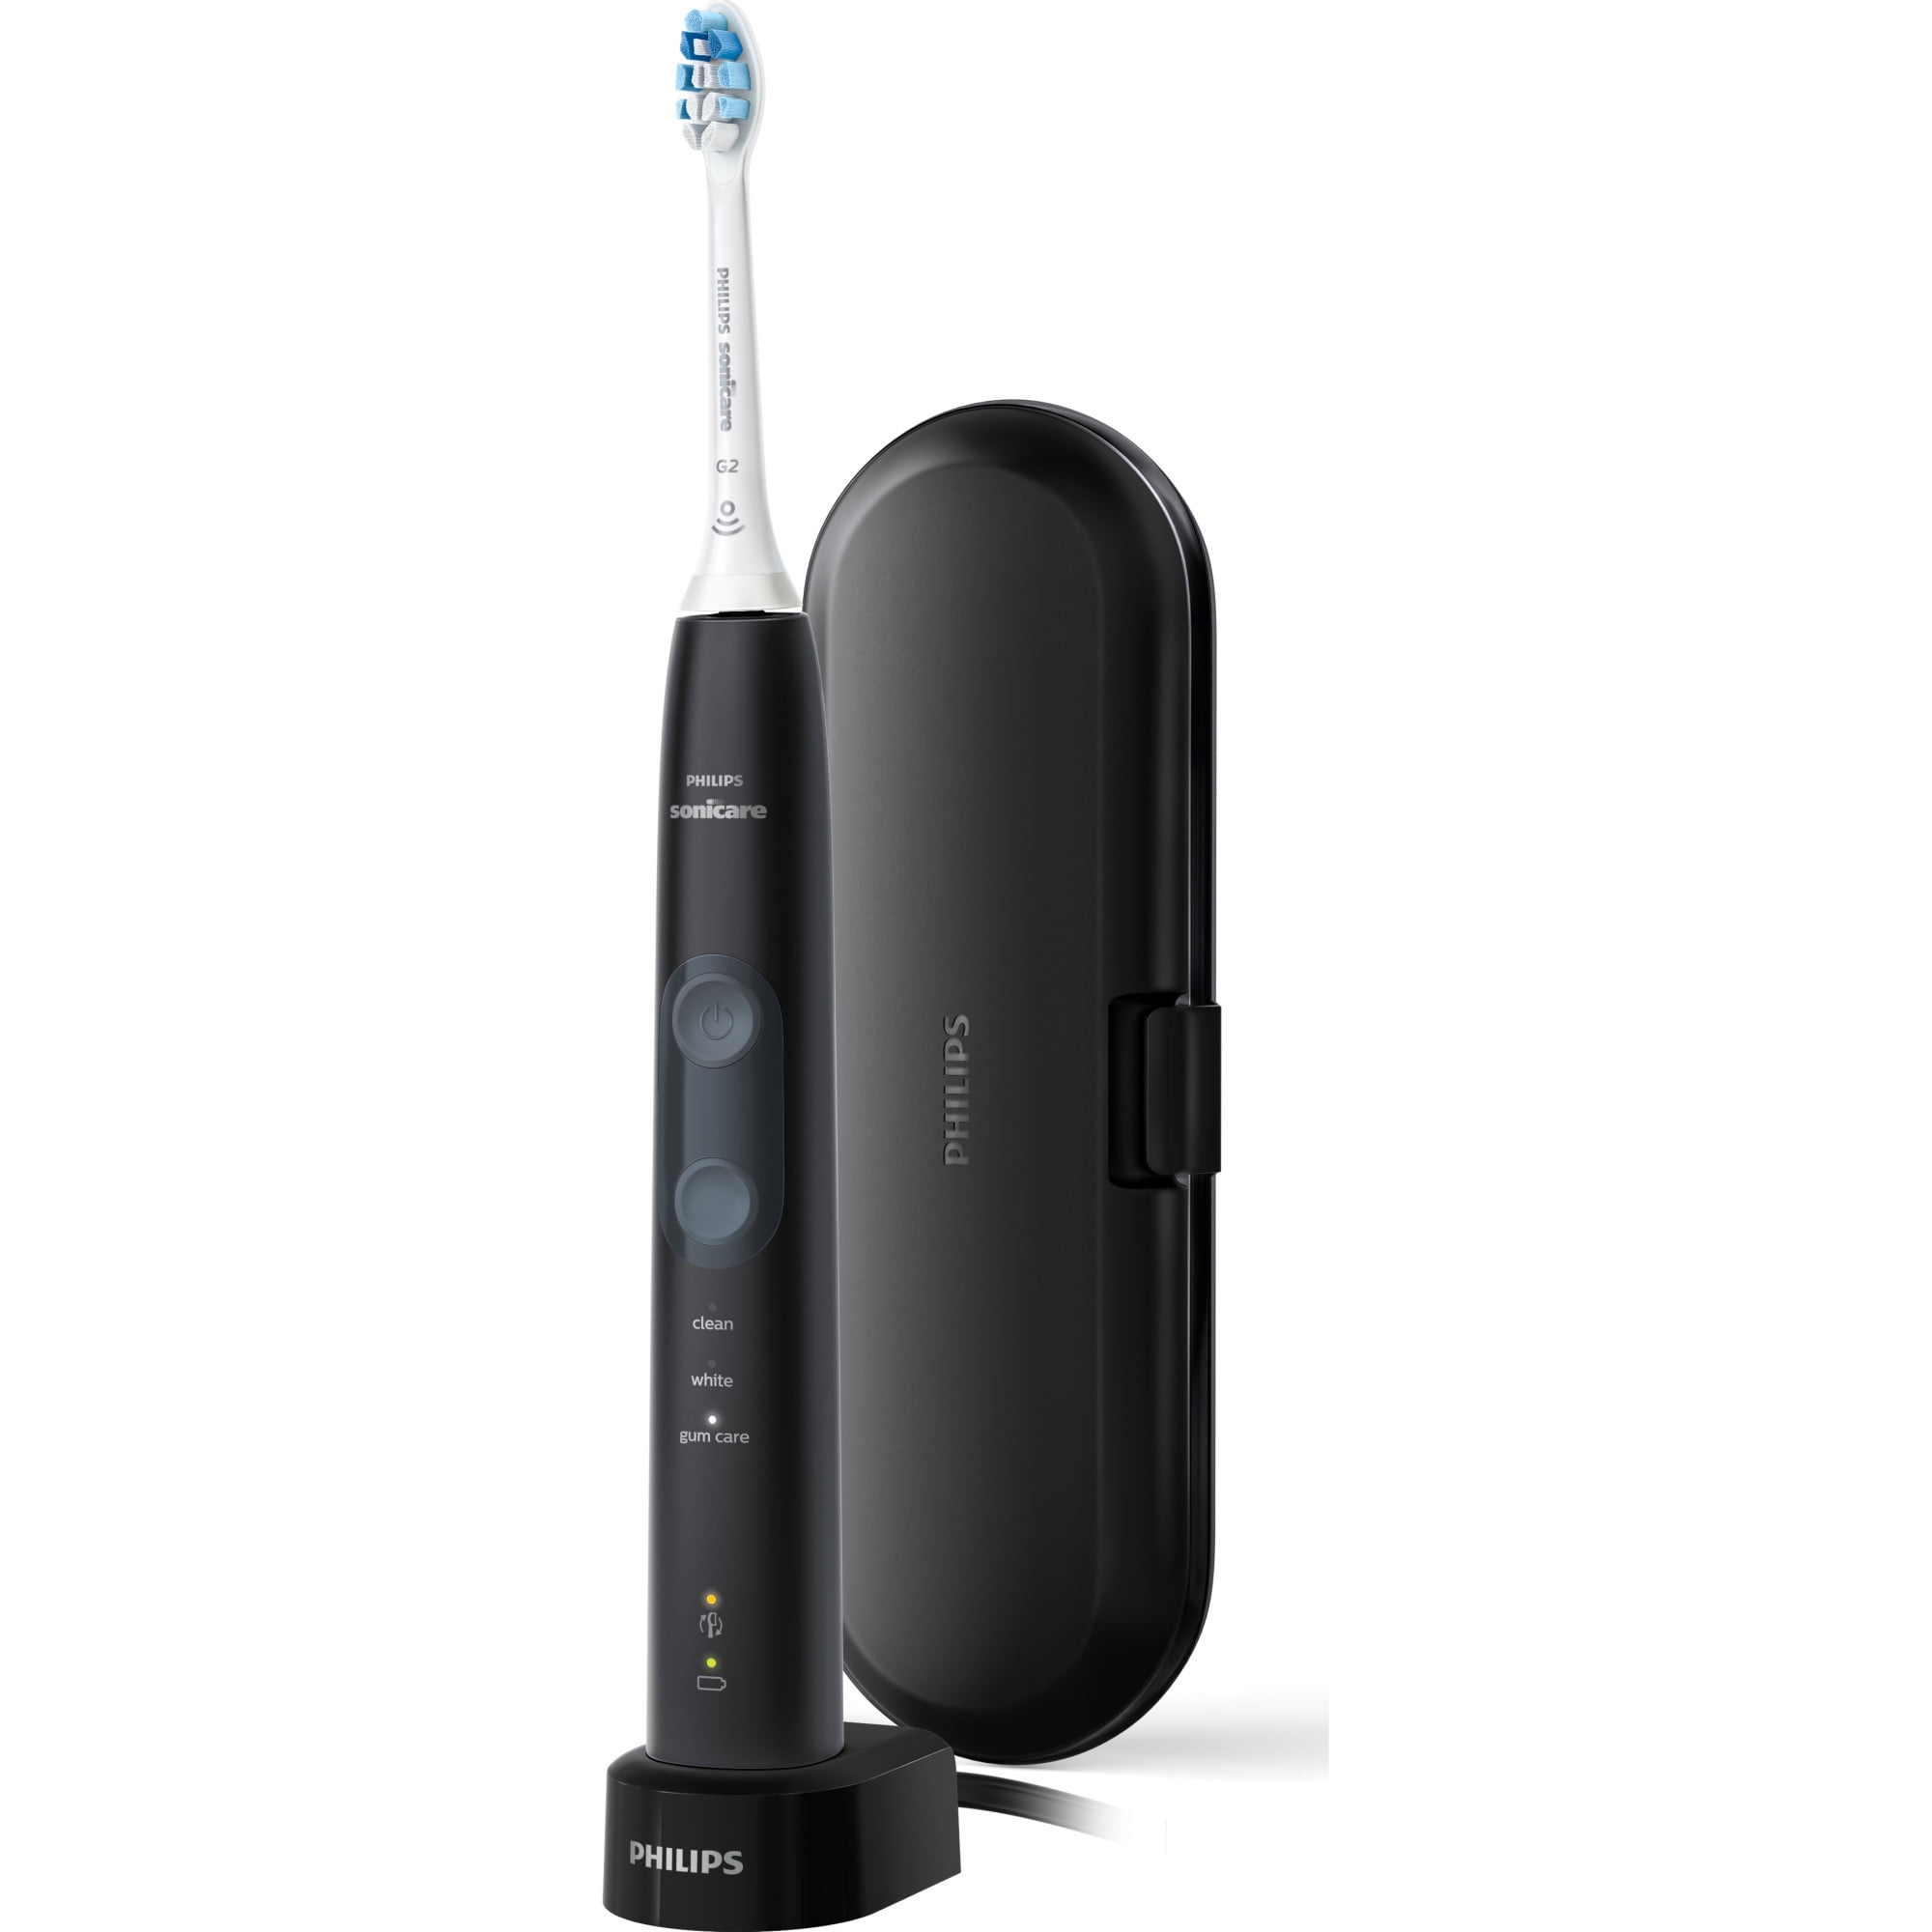 Philips Electric Toothbrush Rebate